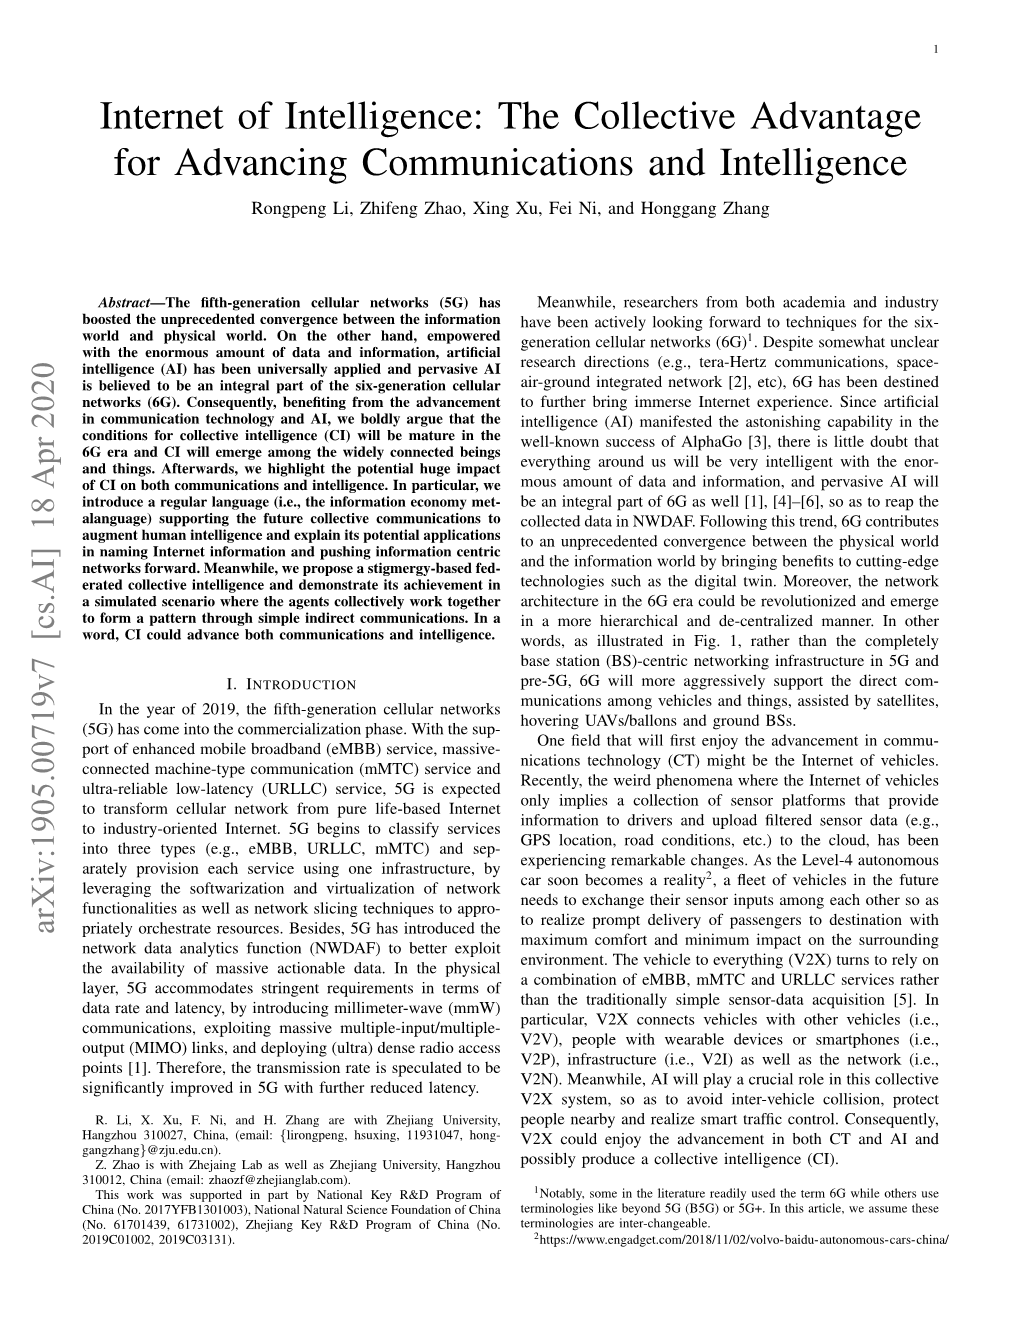 Internet of Intelligence: the Collective Advantage for Advancing Communications and Intelligence Rongpeng Li, Zhifeng Zhao, Xing Xu, Fei Ni, and Honggang Zhang